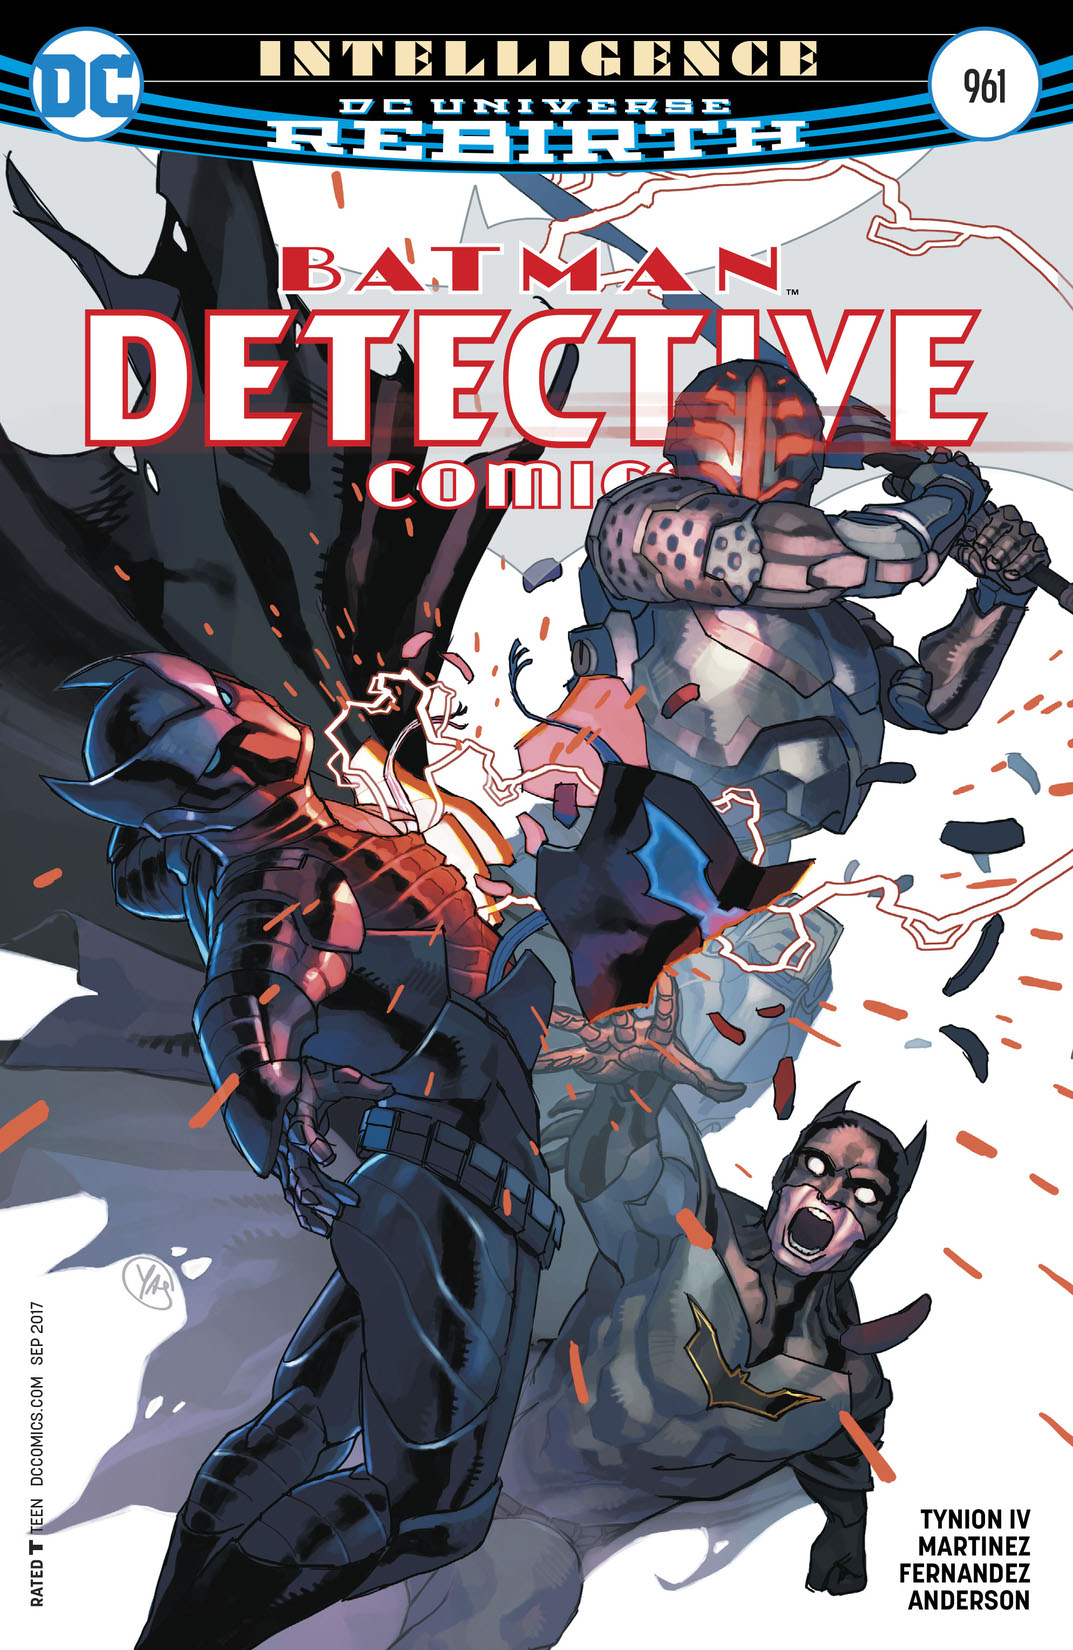 Detective Comics (2016-) #961 preview images